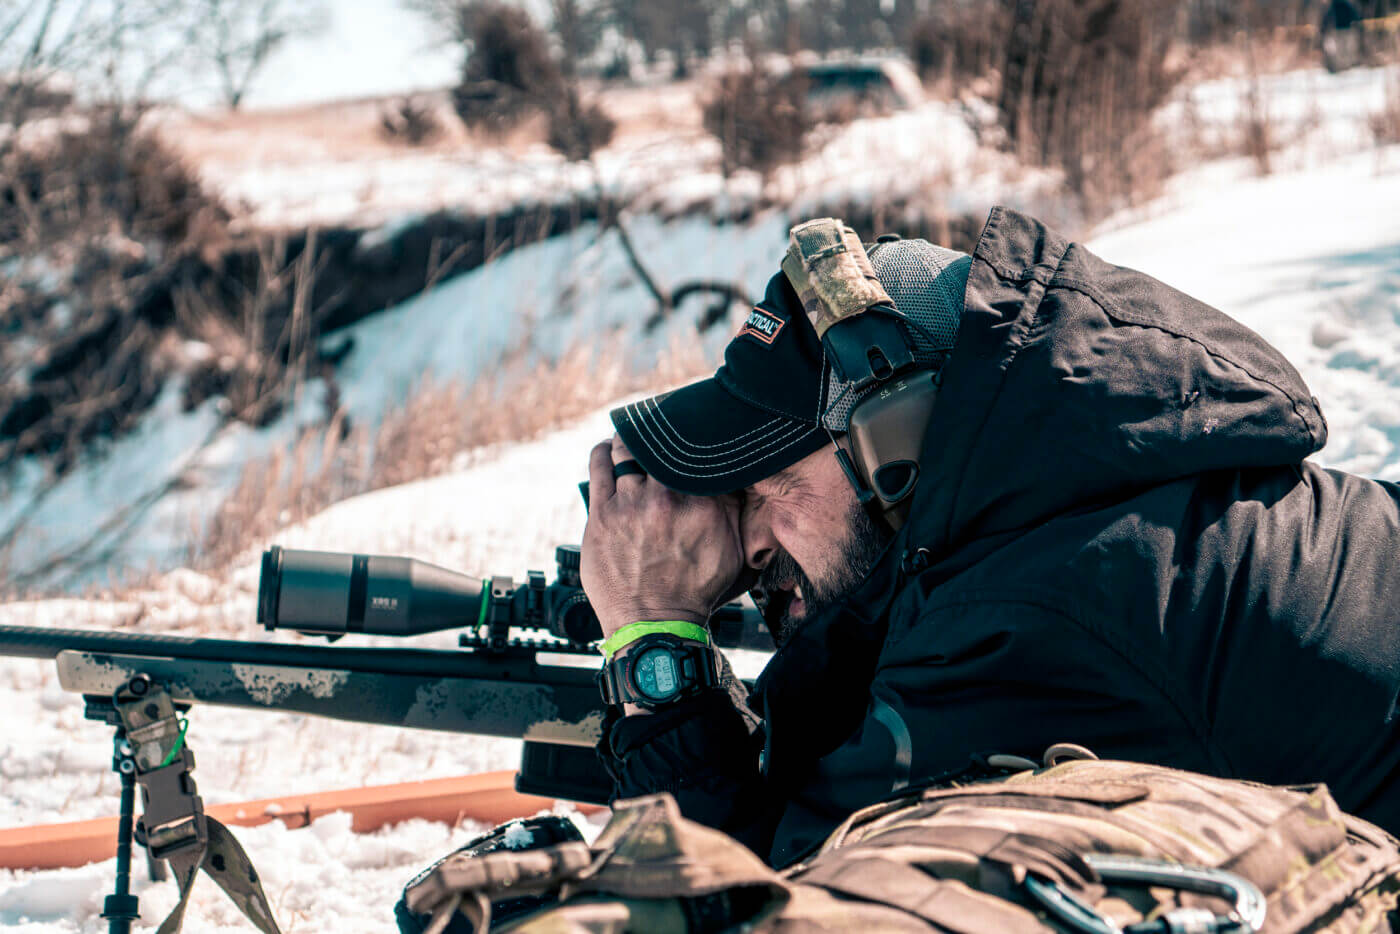 Hunter with binoculars